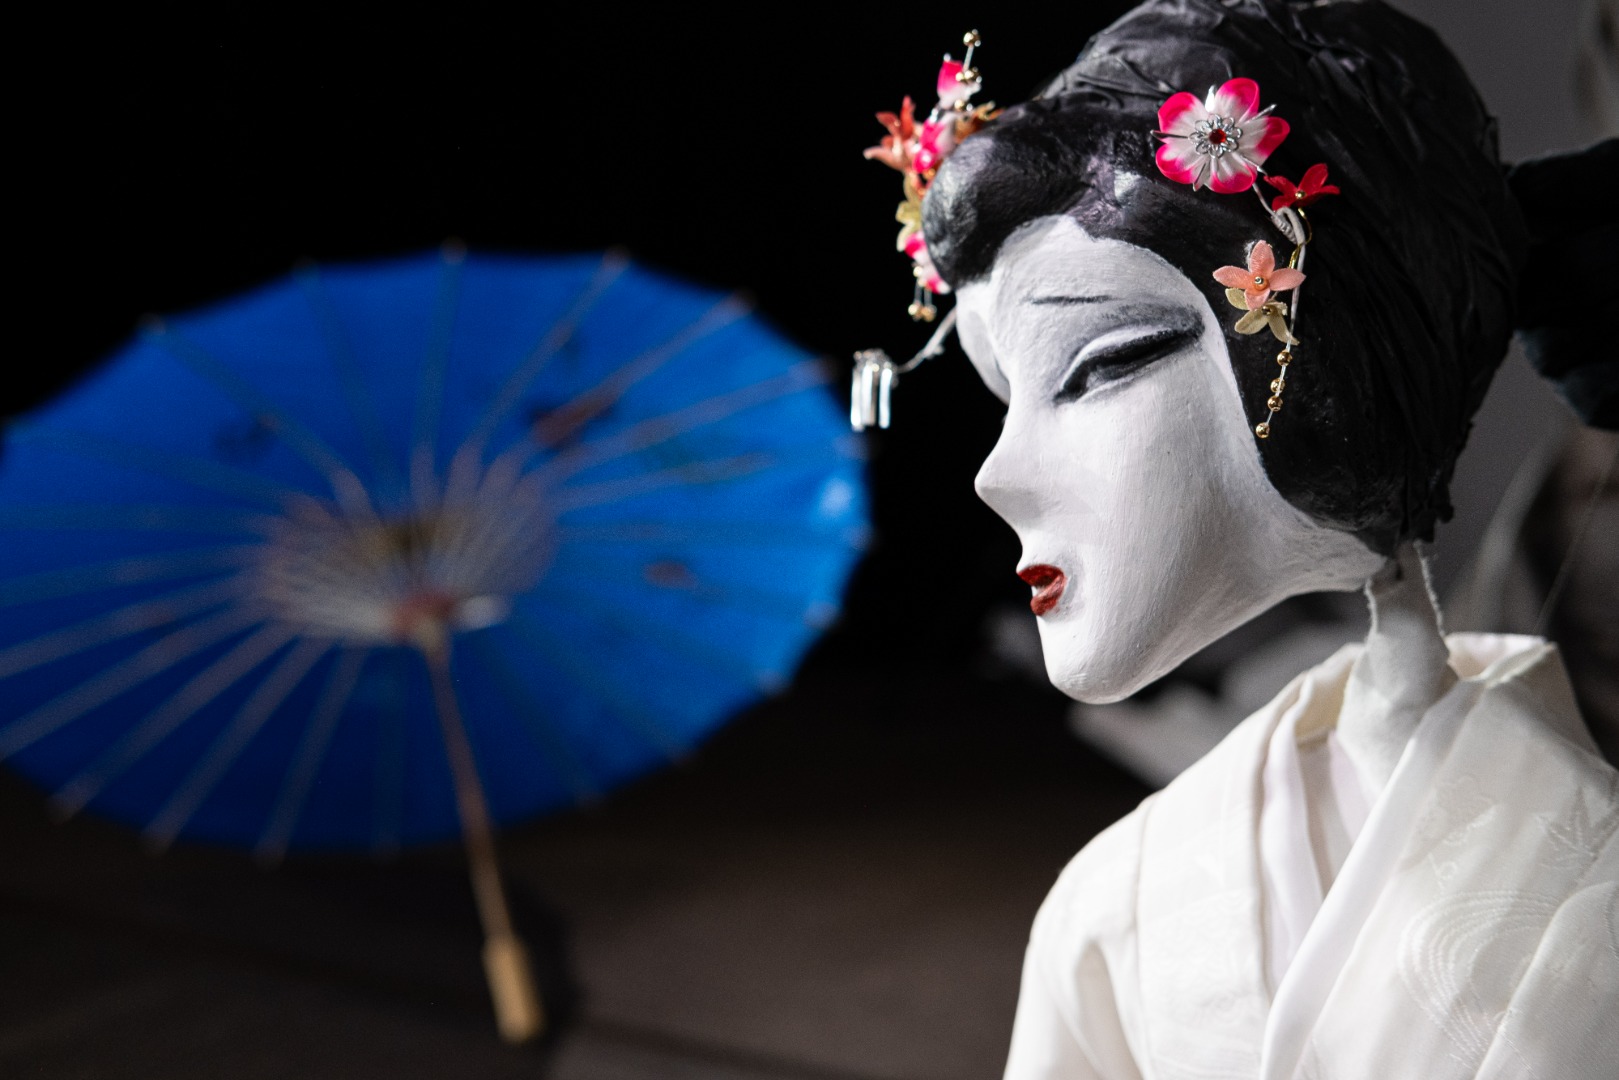 Cio Cio San is portrayed as a doll, created by Philadelphia-based puppet artist Hua Hua Zhang. Photo by Ray Bailey